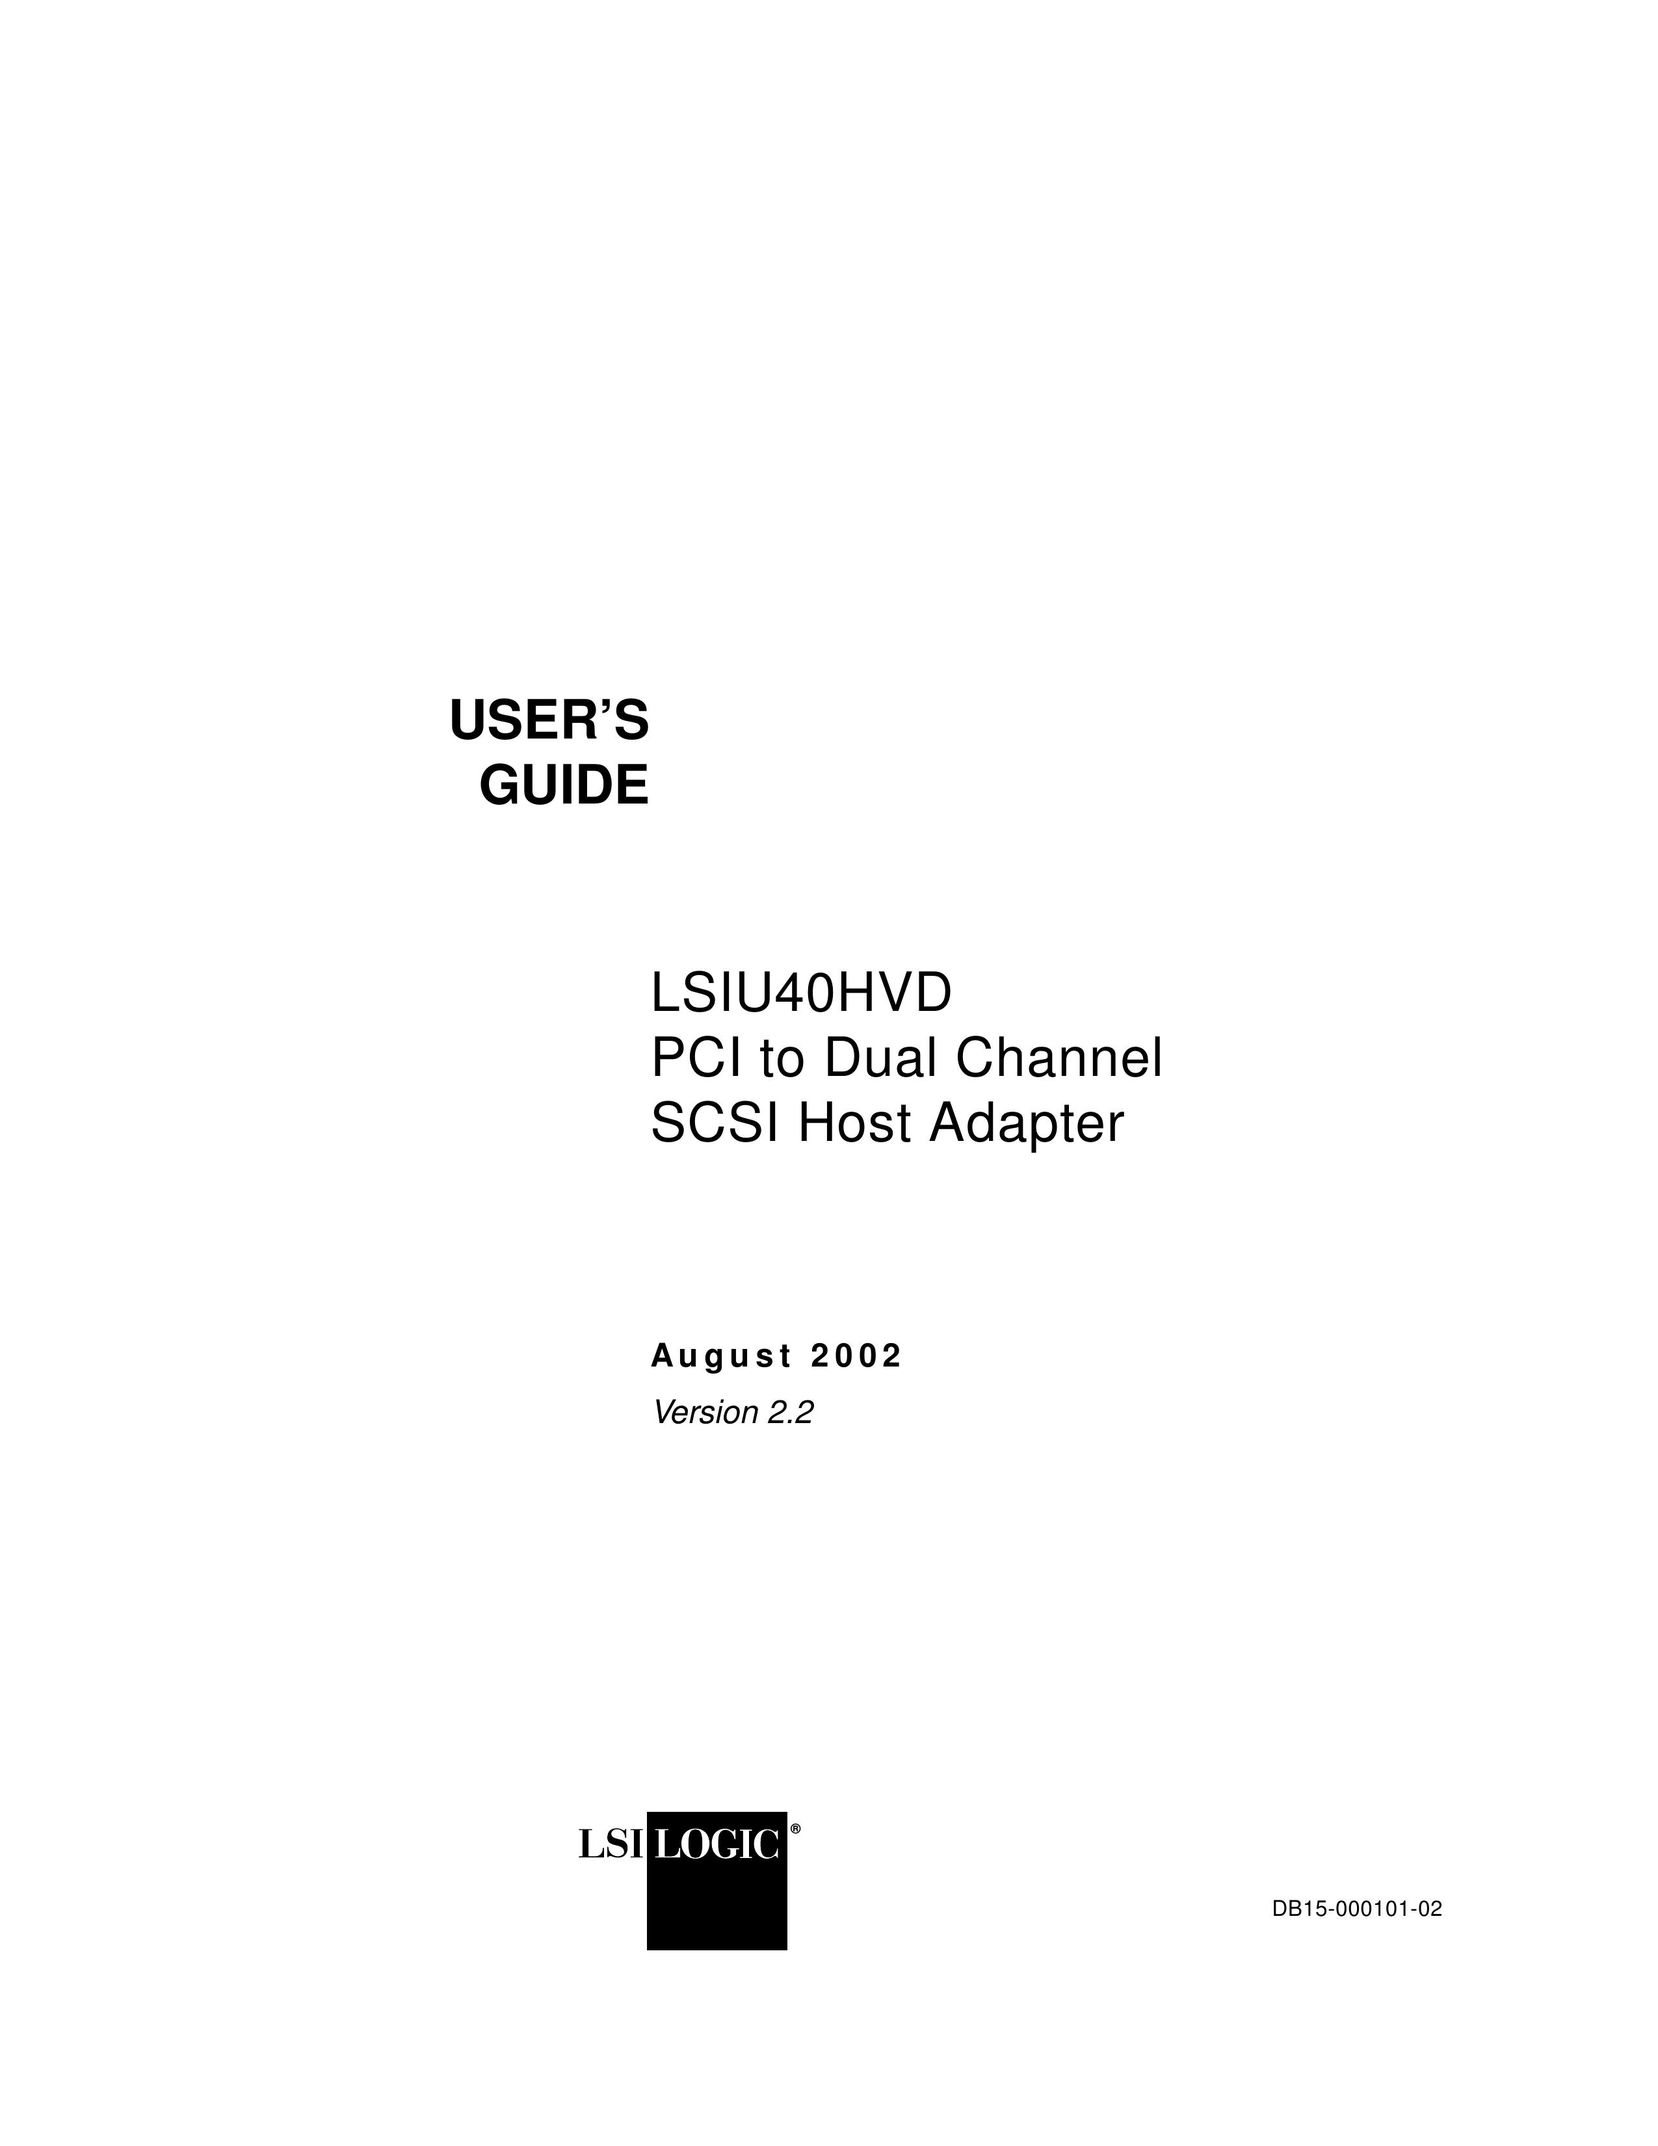 LSI U40HVD Network Card User Manual